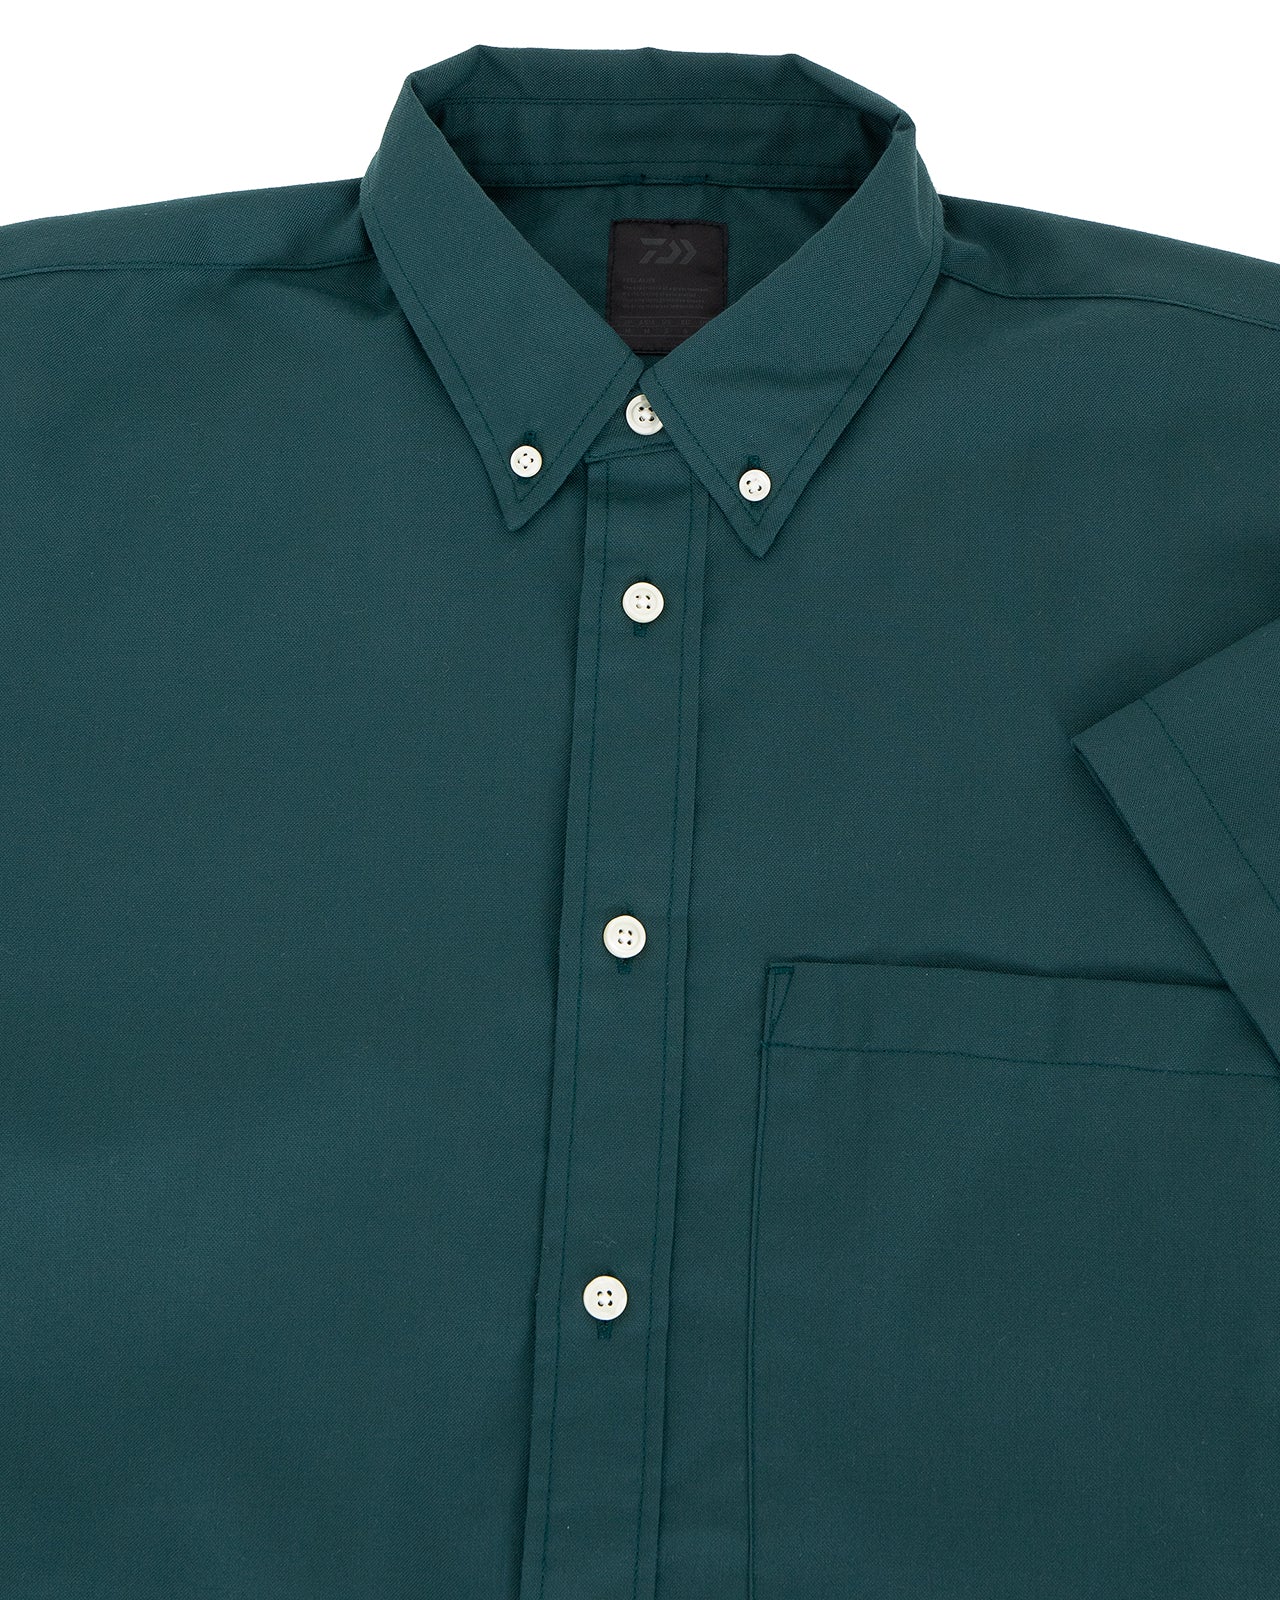 Daiwa Pier39 Tech Button Down Shirt S/S OX, Dark Green